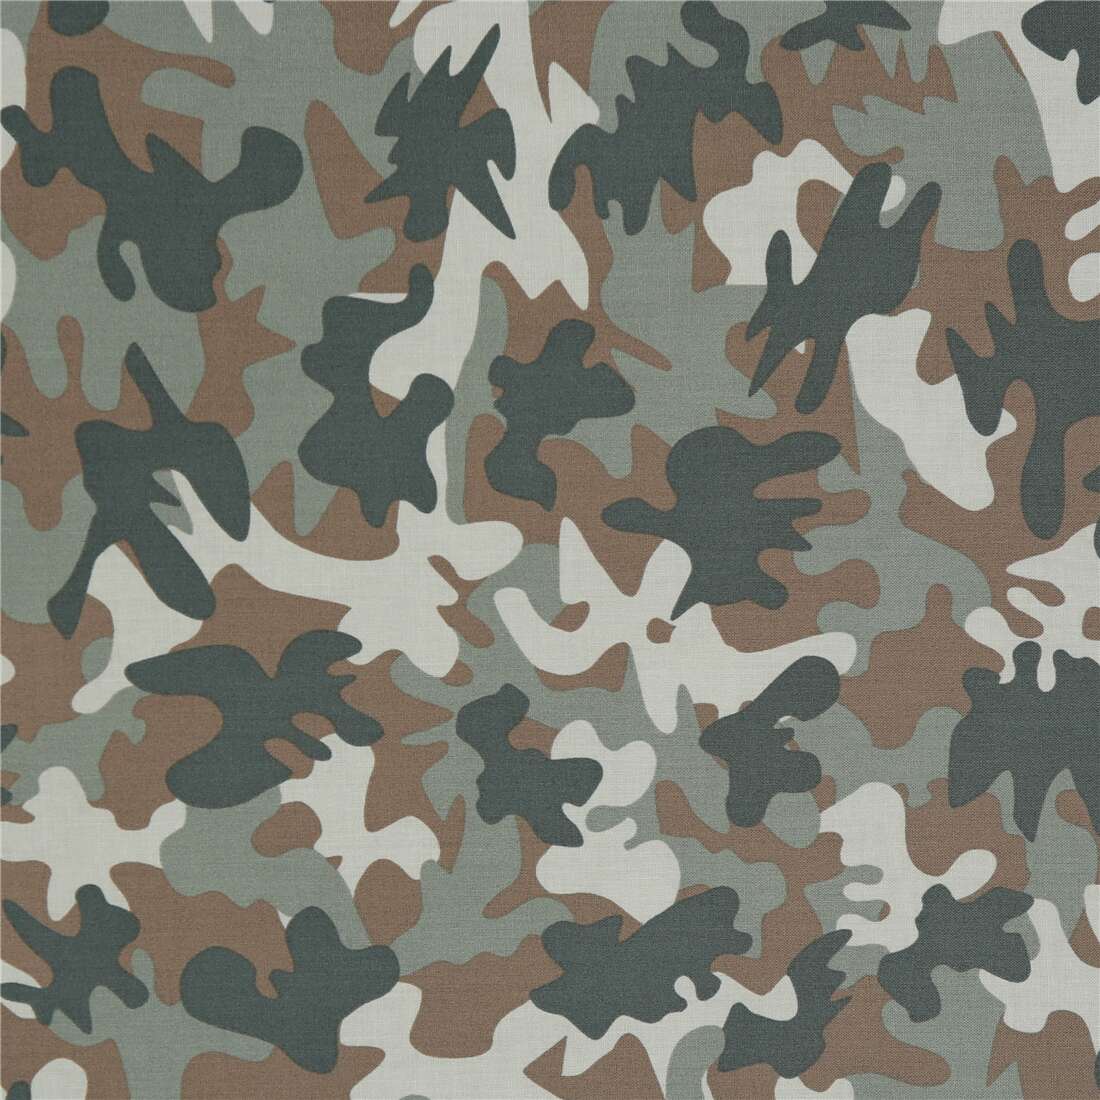 Incognito Camoflague Army Green Camo Fabric by Dear Stella - modeS4u